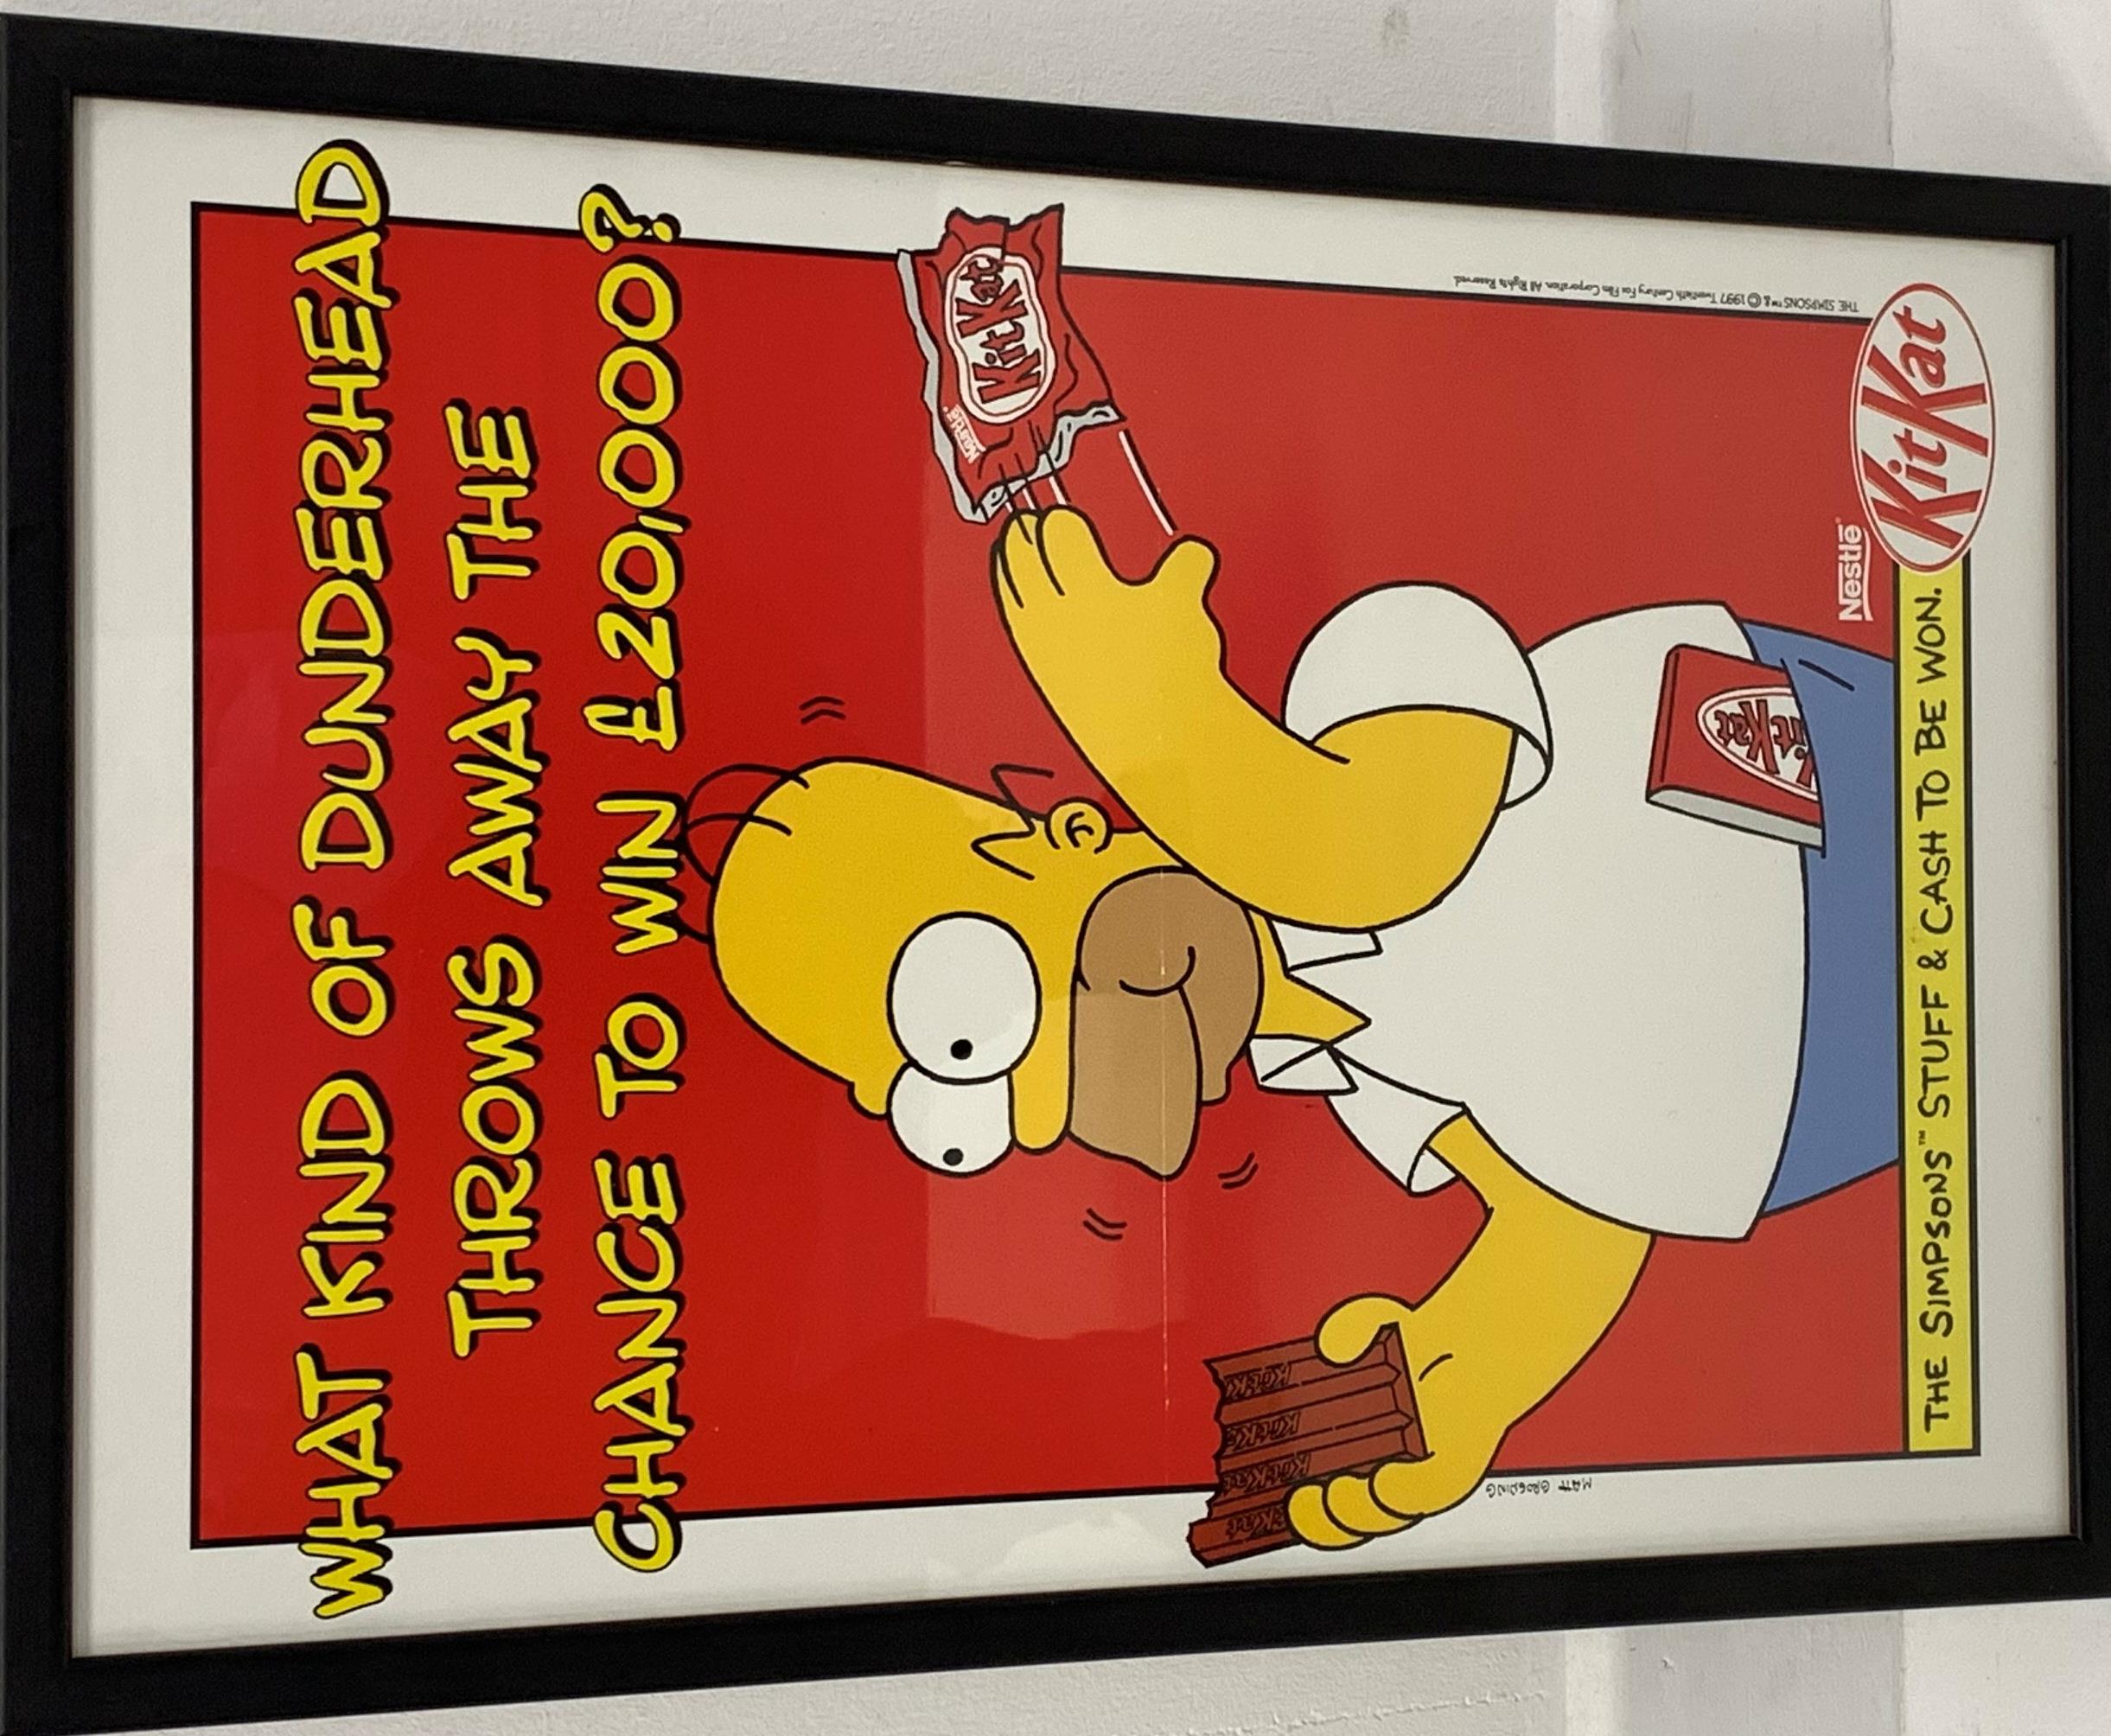 The Simpsons advertising print for Nestle, 39cm x 26cm